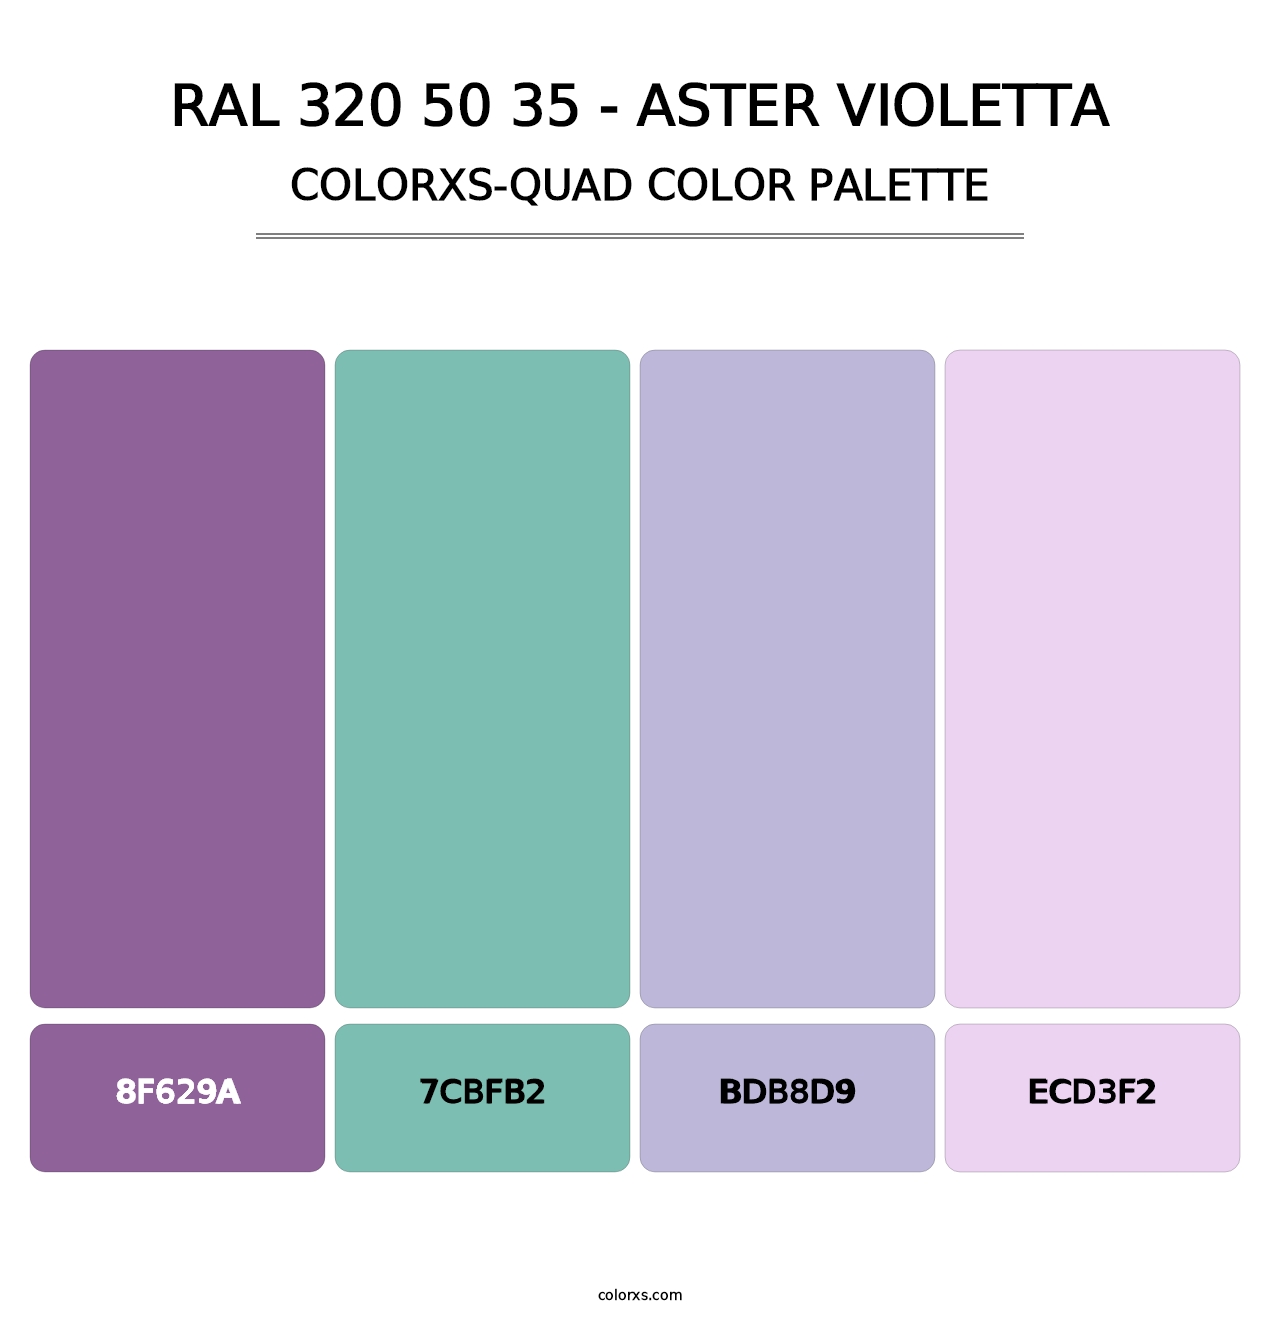 RAL 320 50 35 - Aster Violetta - Colorxs Quad Palette